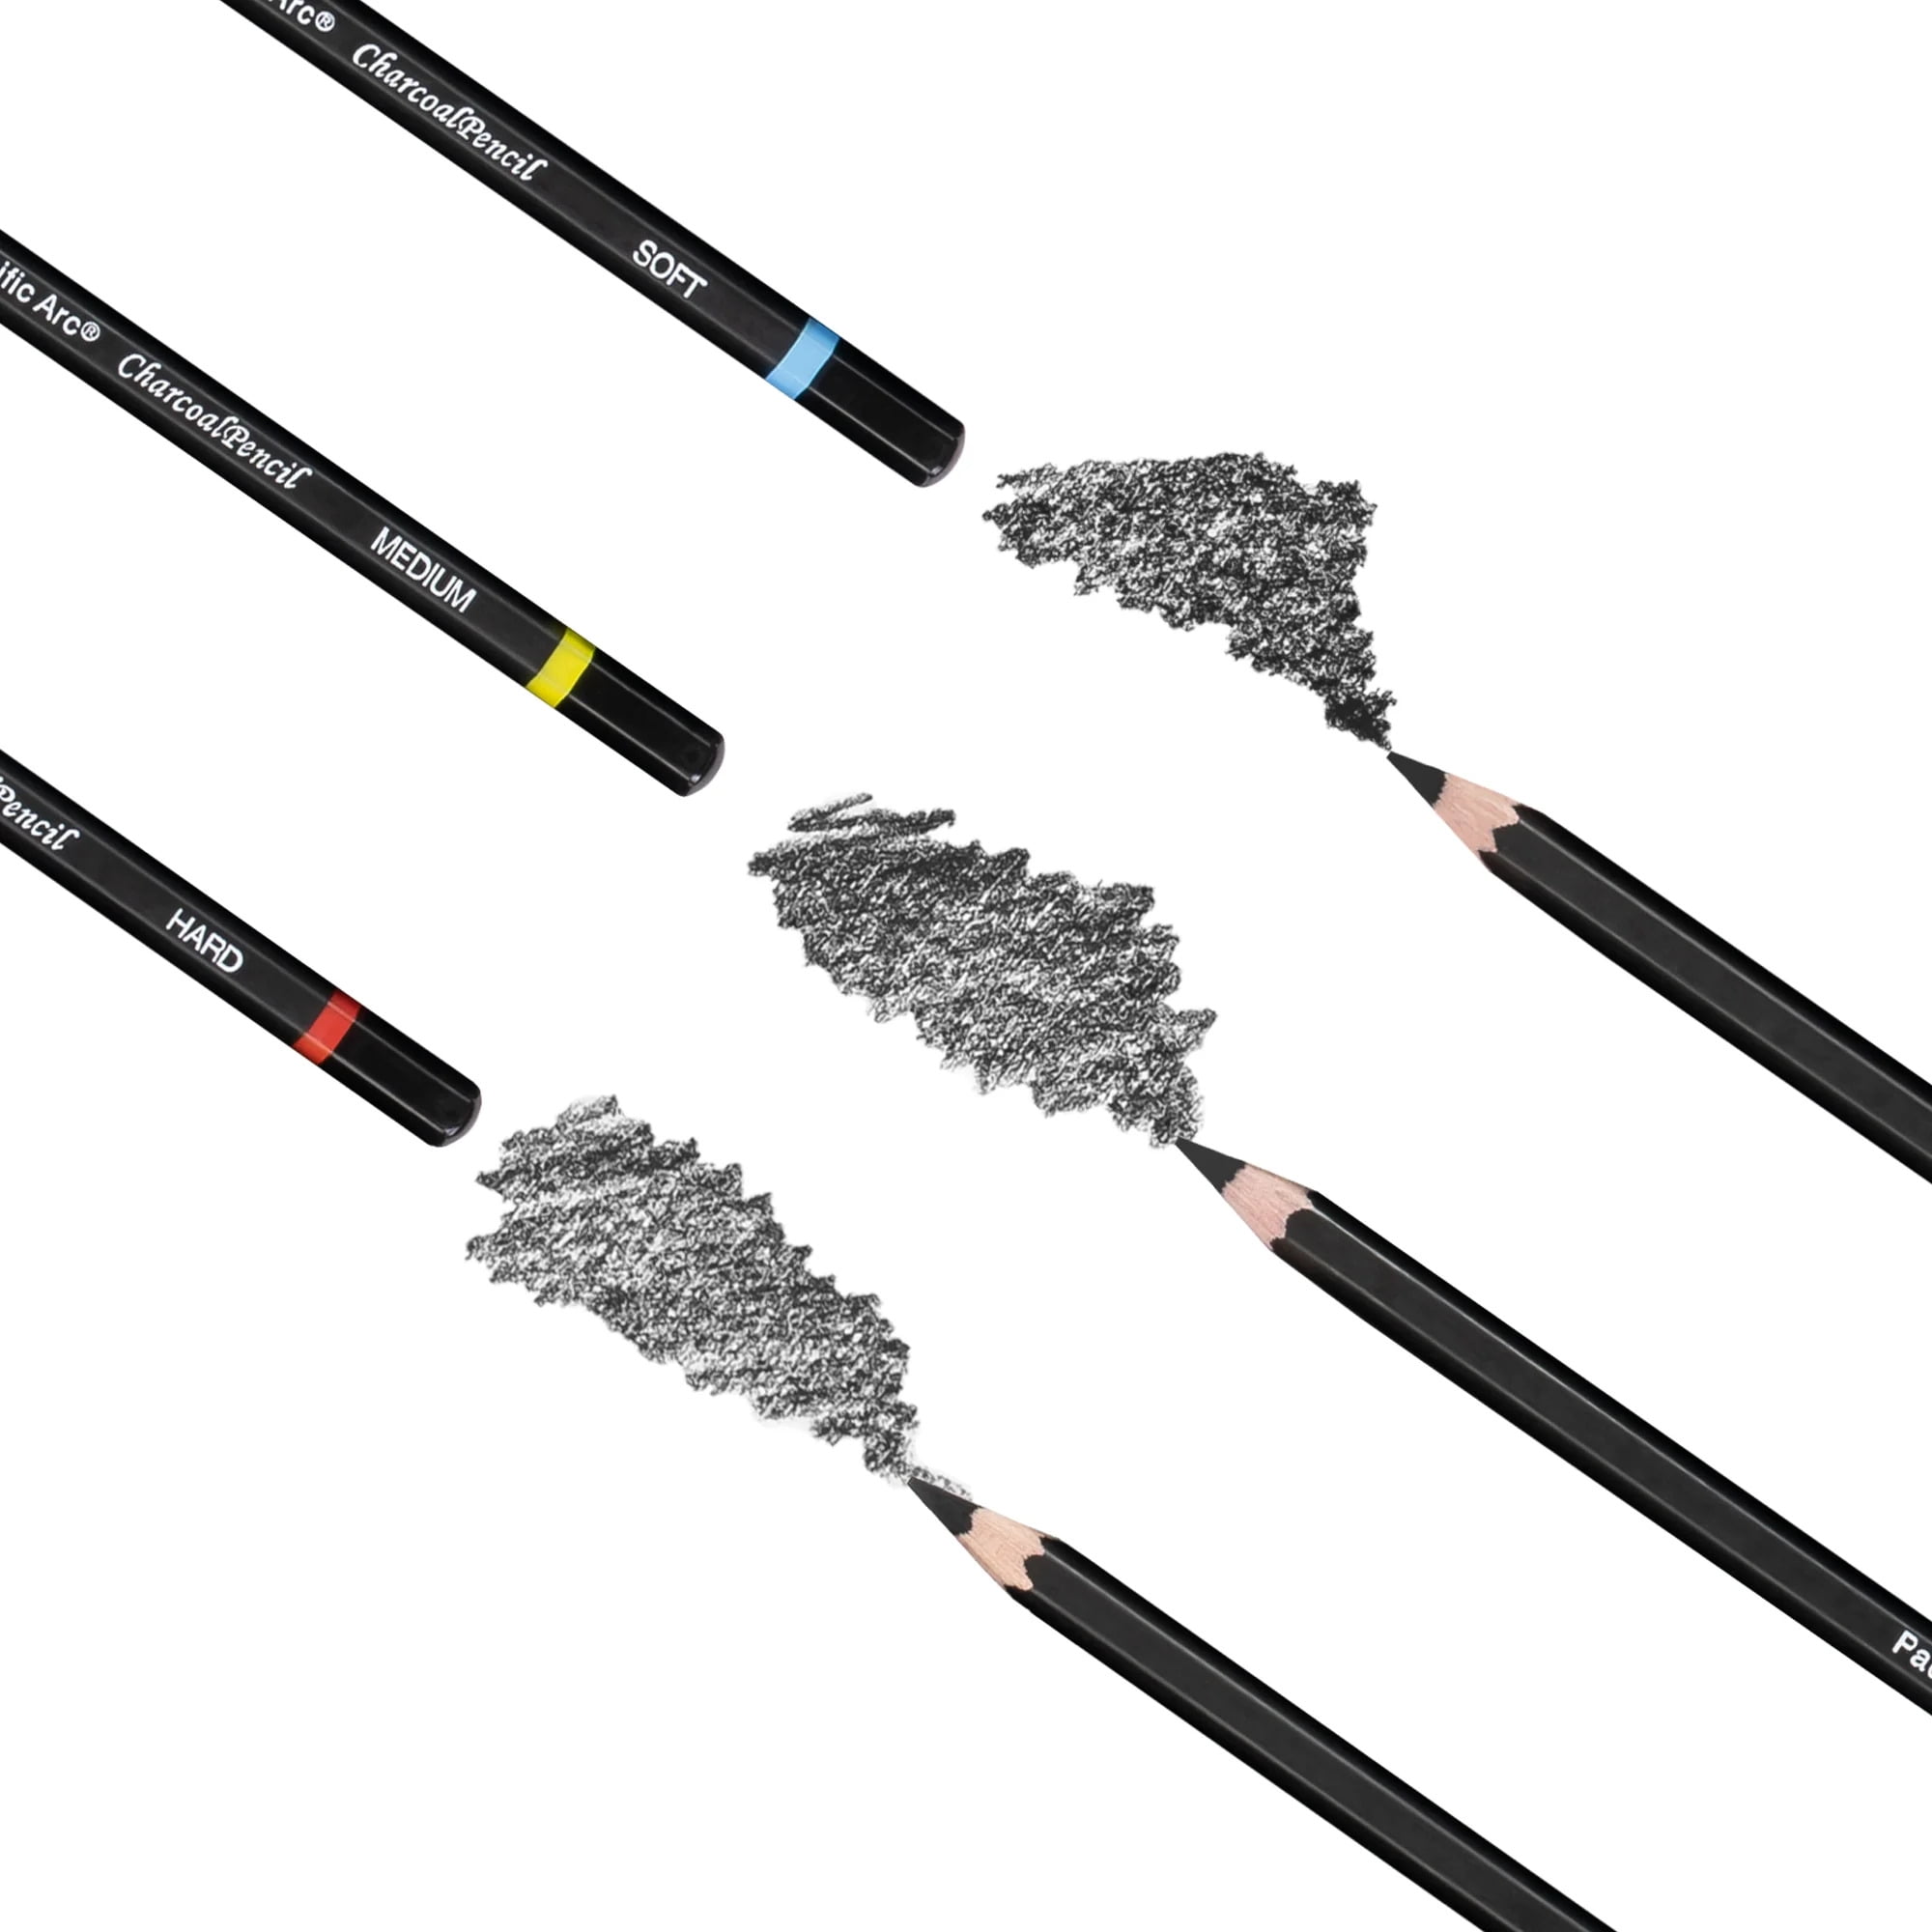 Deli Professional Sketch Pencils Set Charcoal Soft/Medium/Hard Carbon –  AOOKMIYA